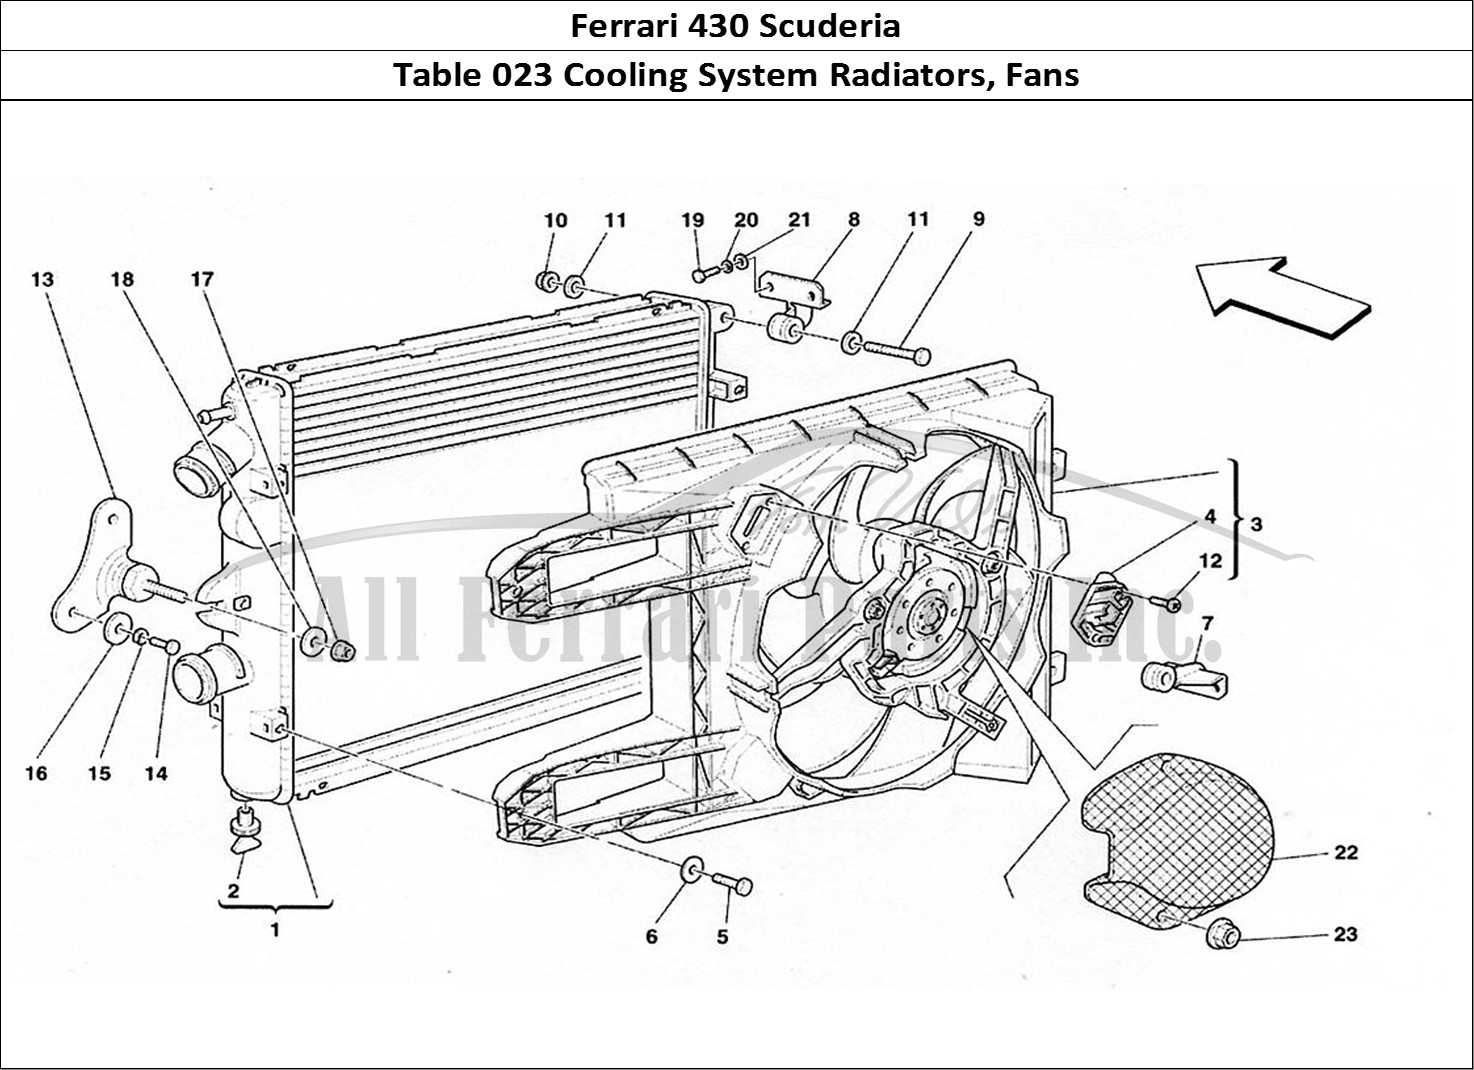 Ferrari Parts Ferrari 430 Scuderia Page 023 Cooling System Radiators